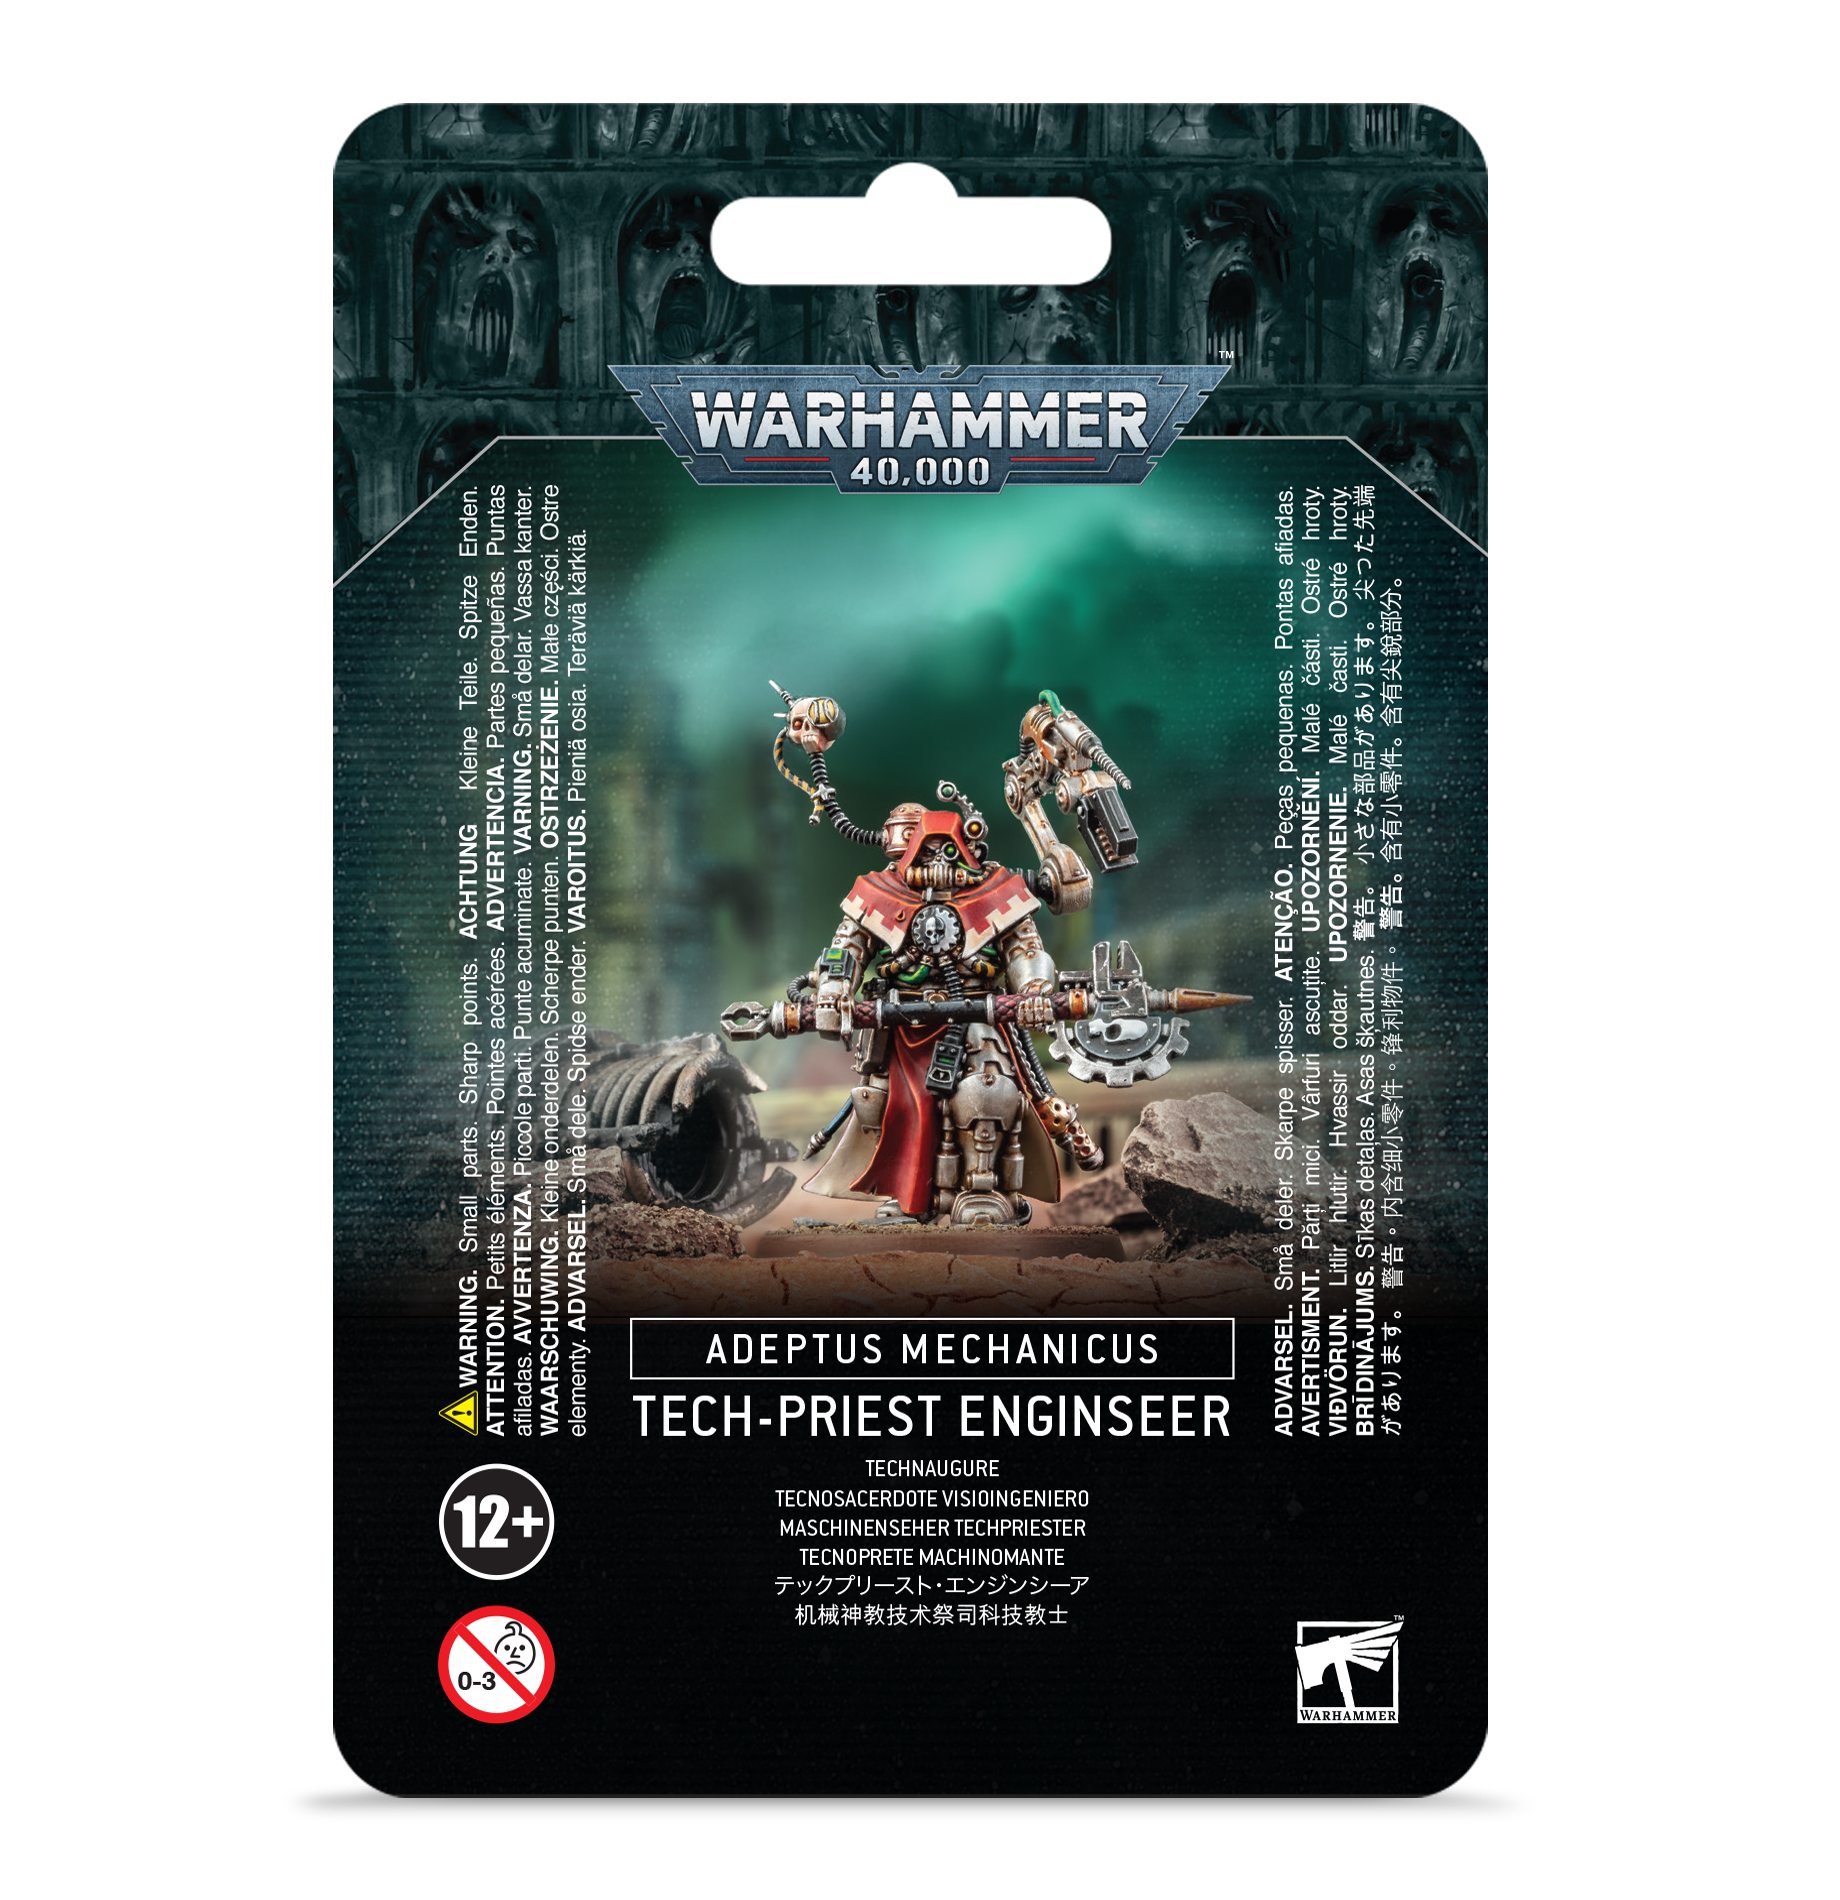 Tech-Priest Enginseer - 59-27 - Adeptus mechanicus - Warhammer 40.000